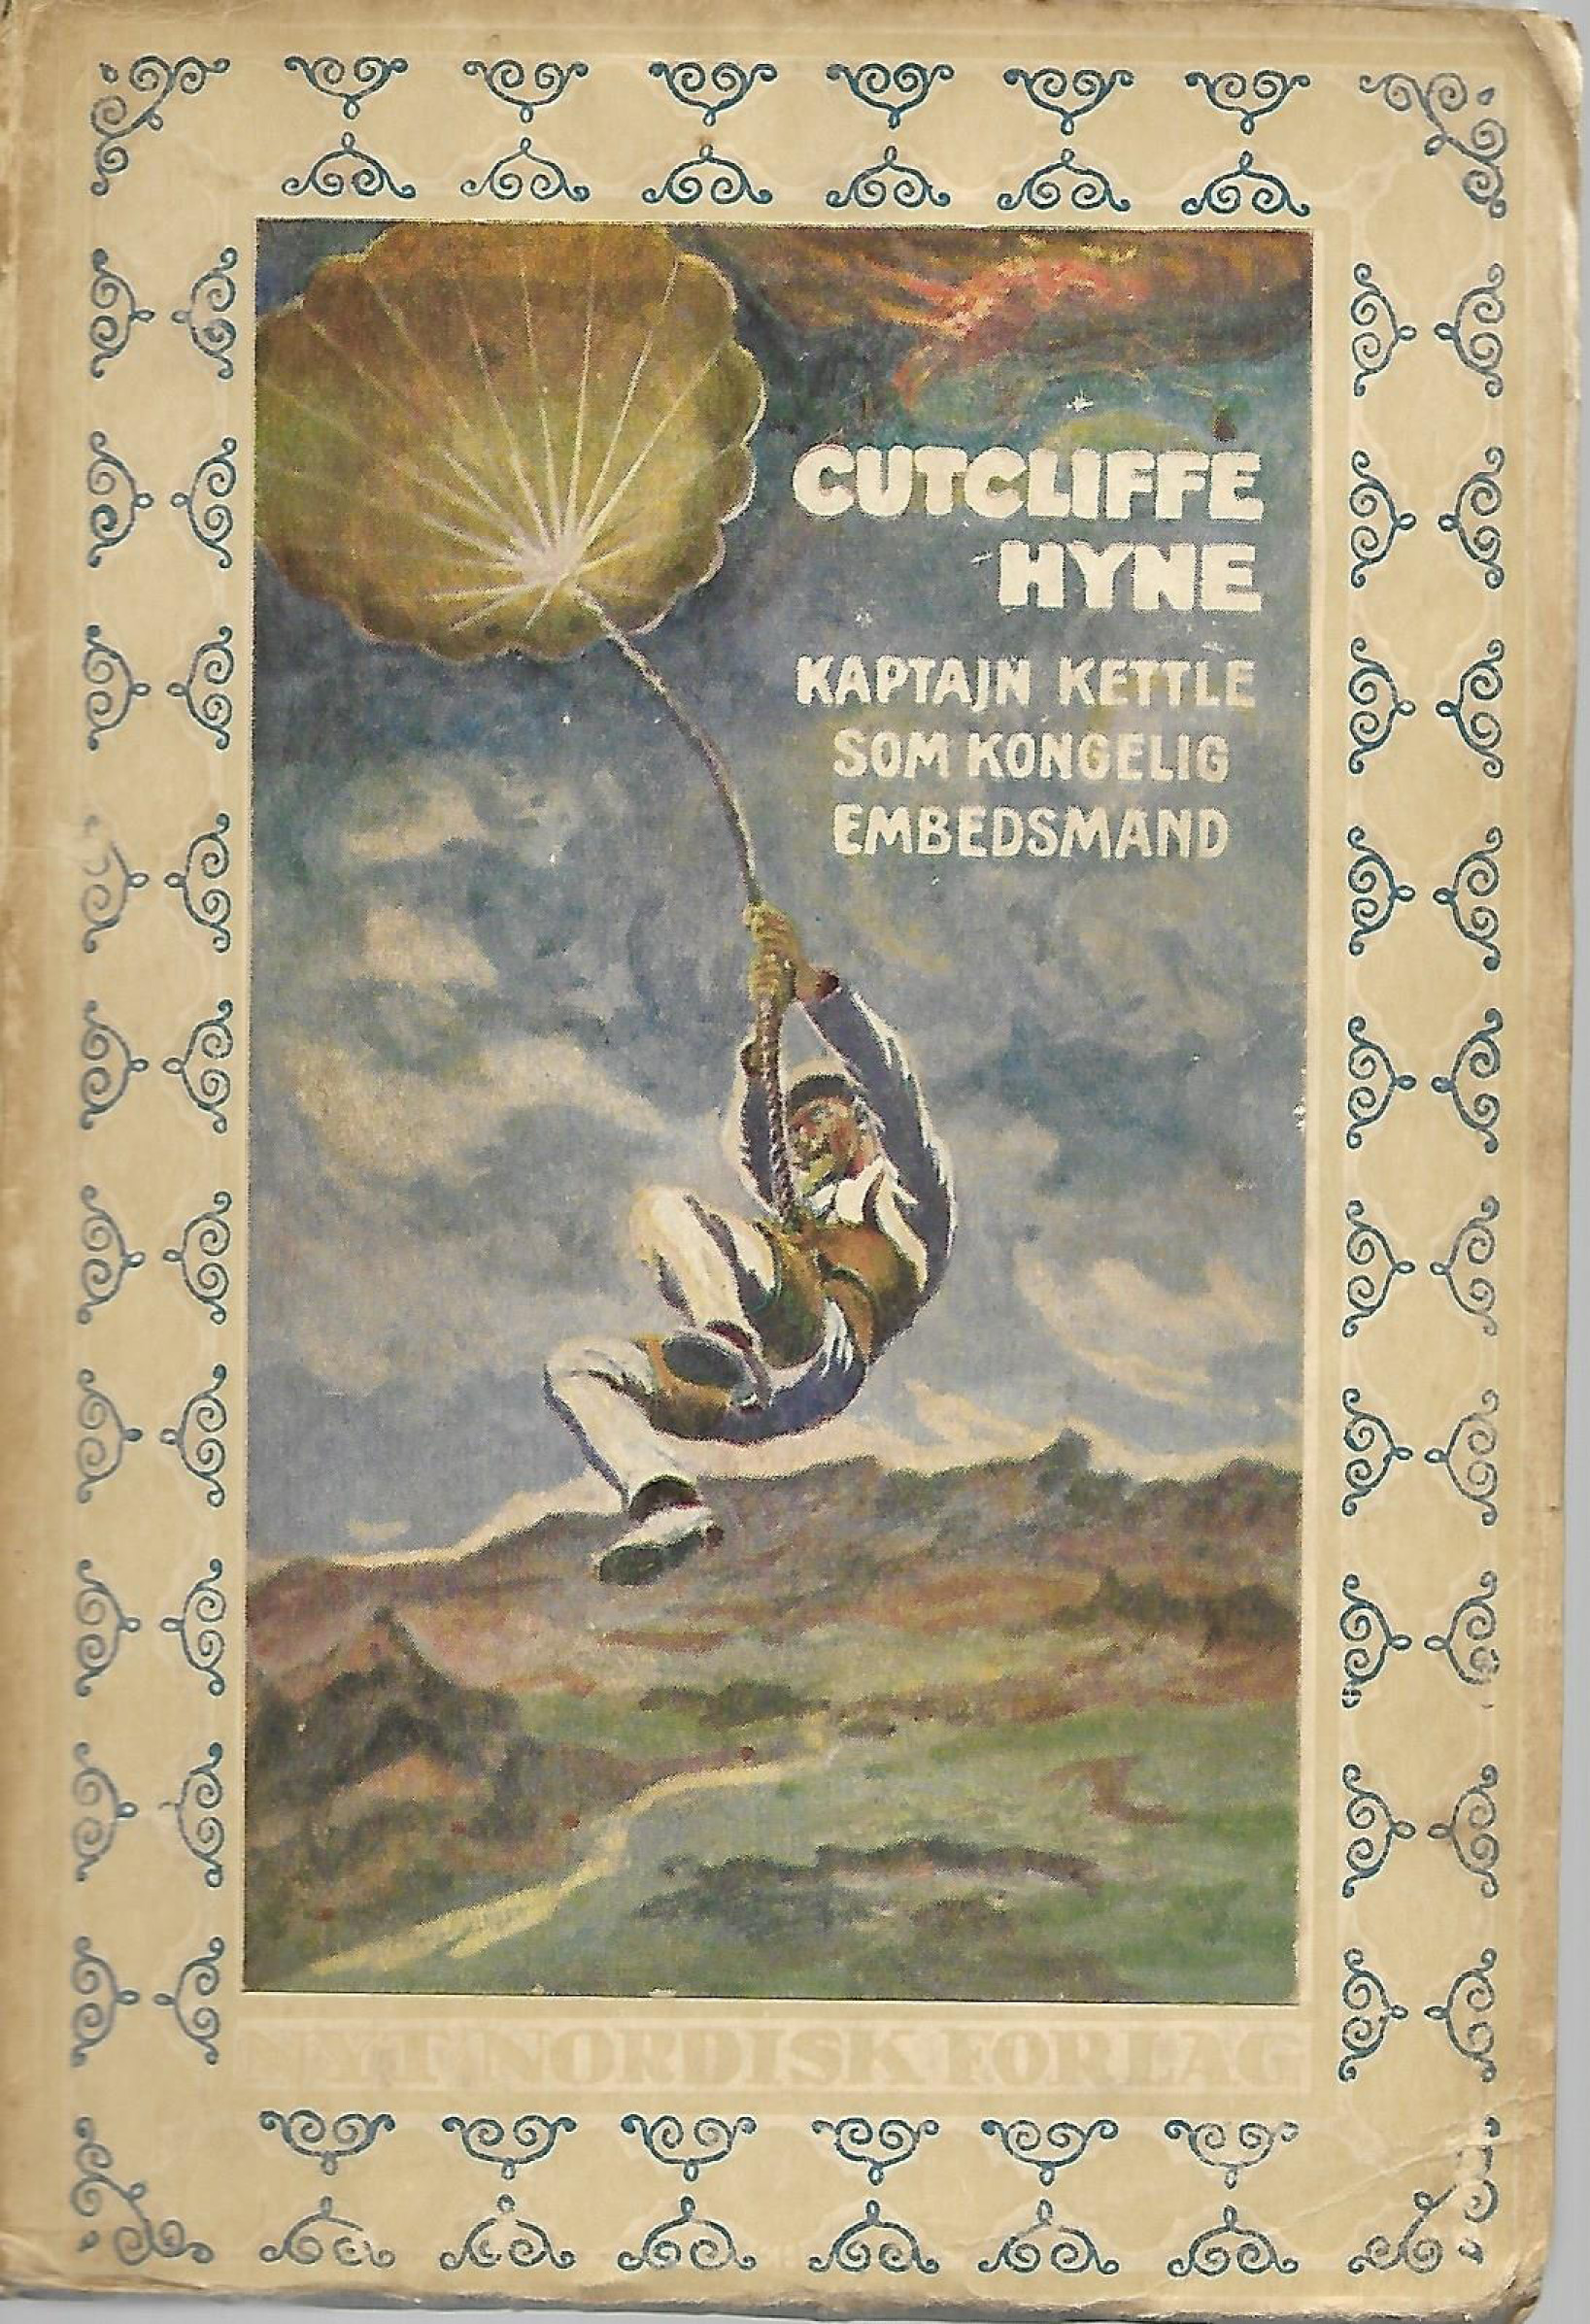 Kaptajn Kettle som kongelig embedsmand - Cutcliffe Hune 1919-1